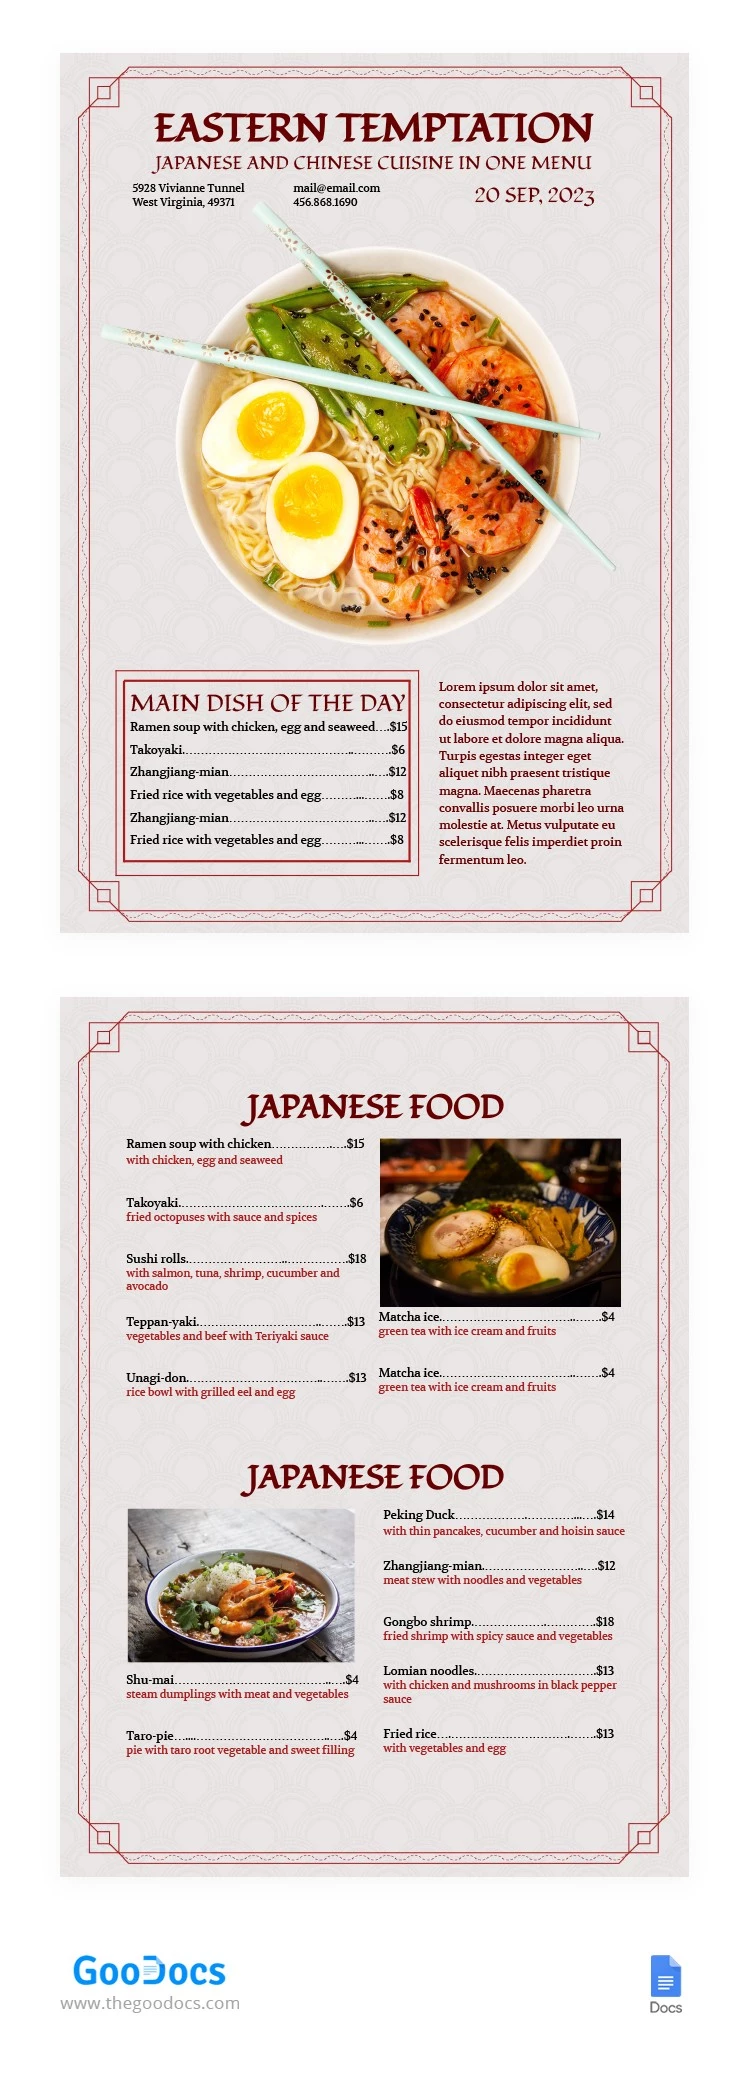 Cardápio de Restaurante do Jornal Oriental - free Google Docs Template - 10065895